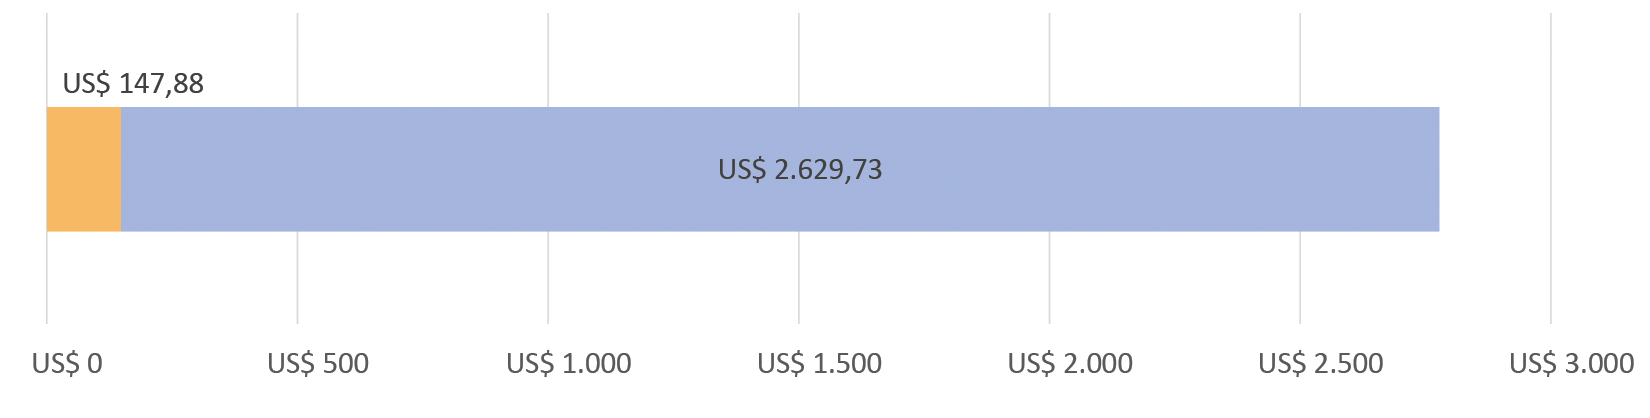 US$147,88 gastos; US$2.629,73 restantes